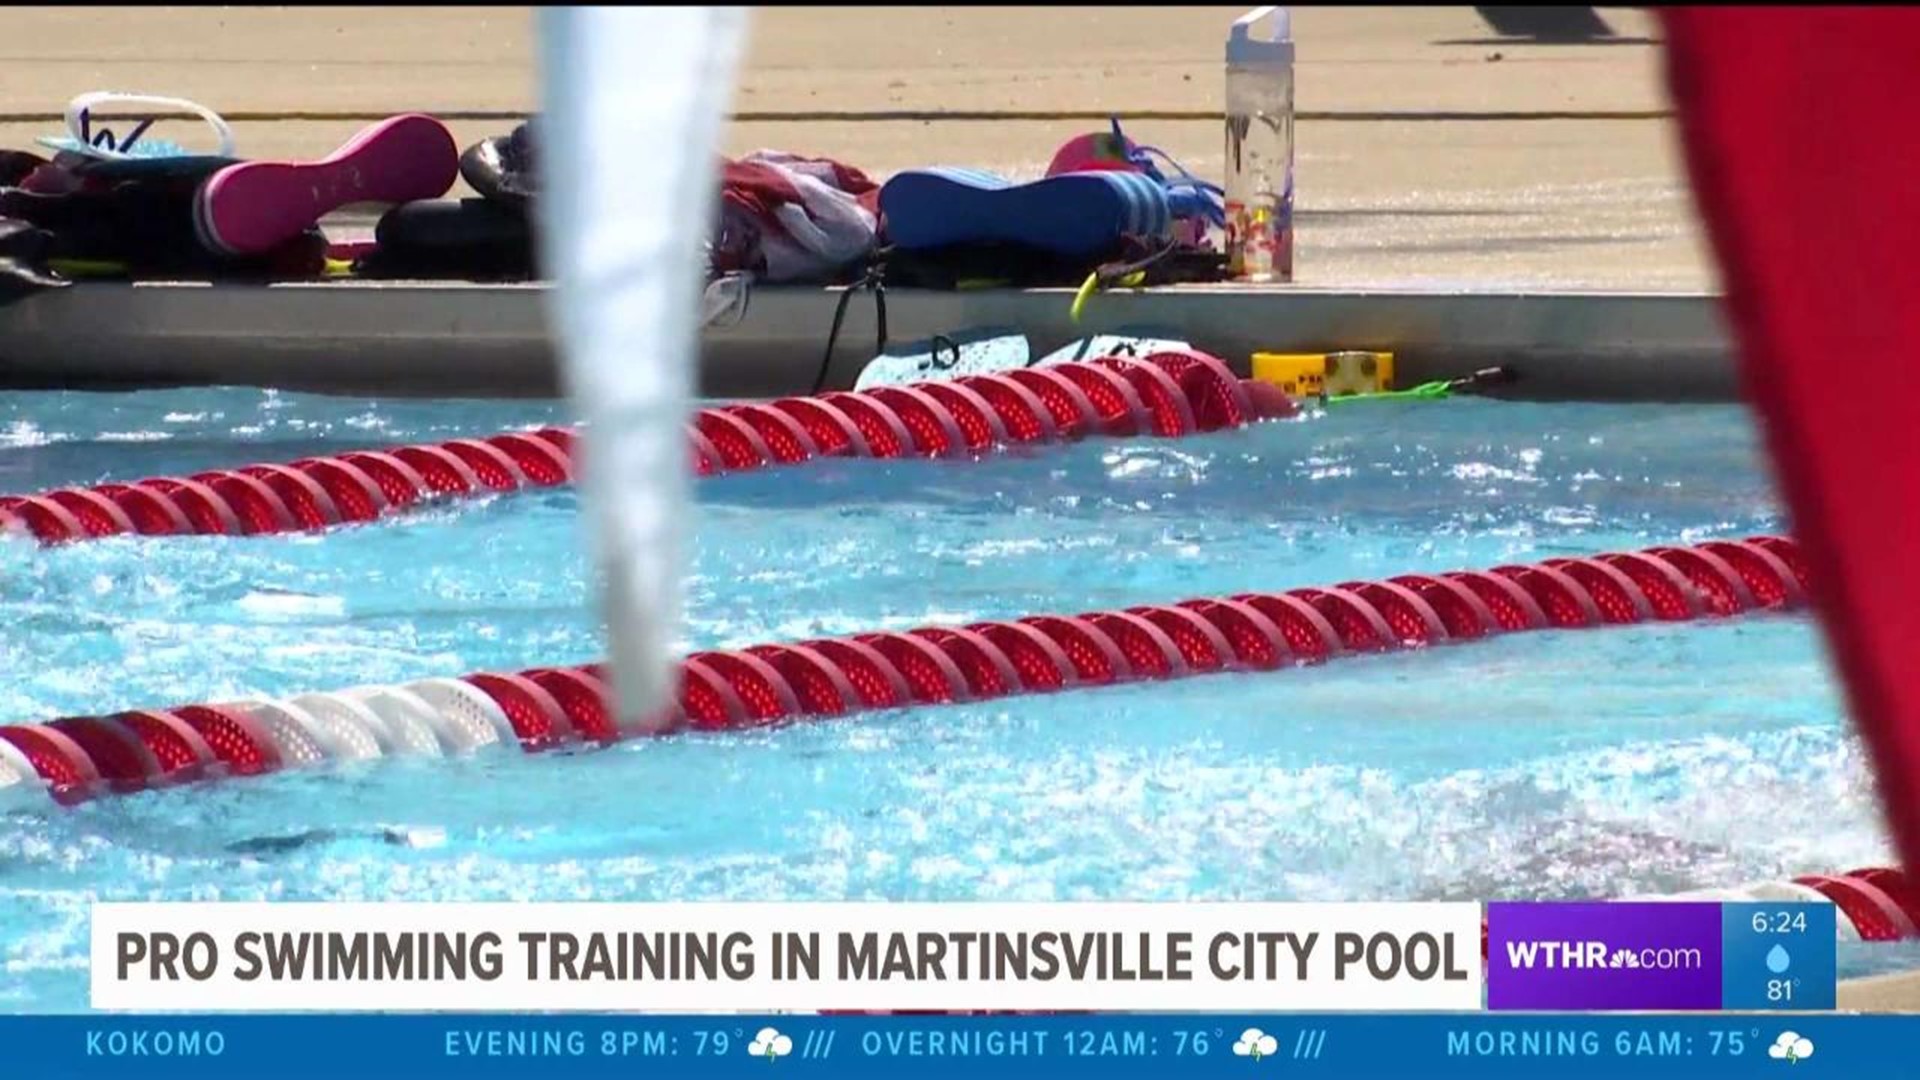 Pro swimming training at Martinsville city pool